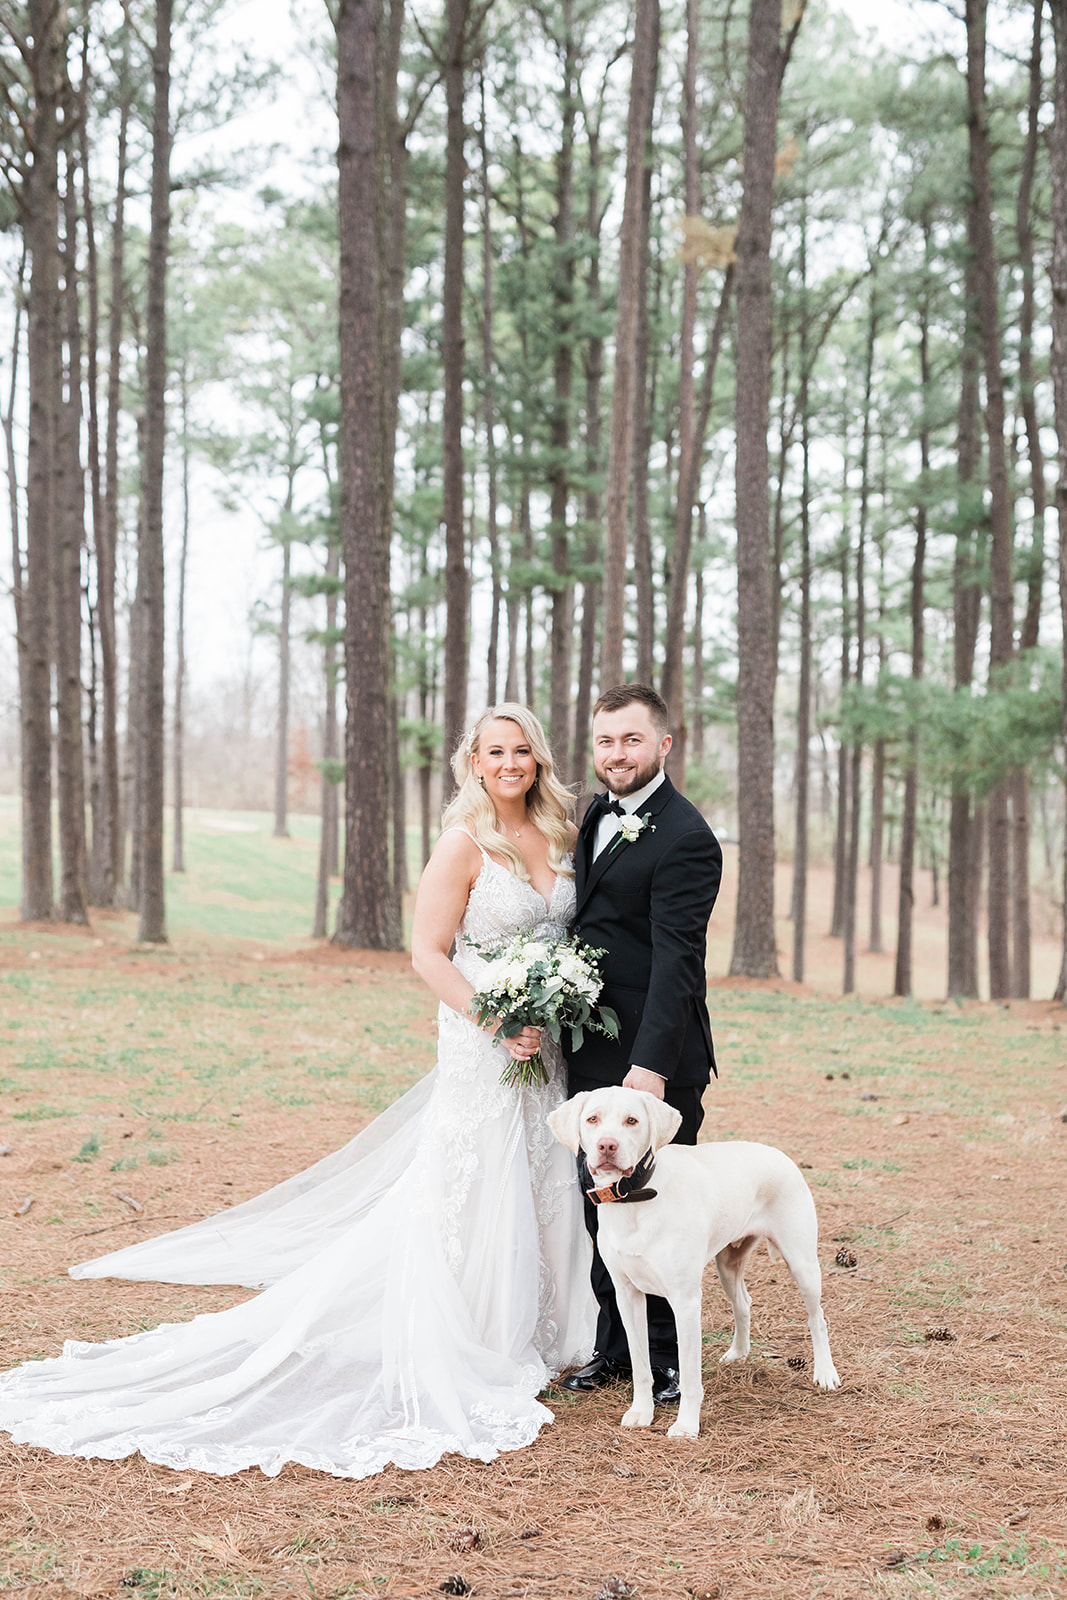 Couple and dog on wedding day